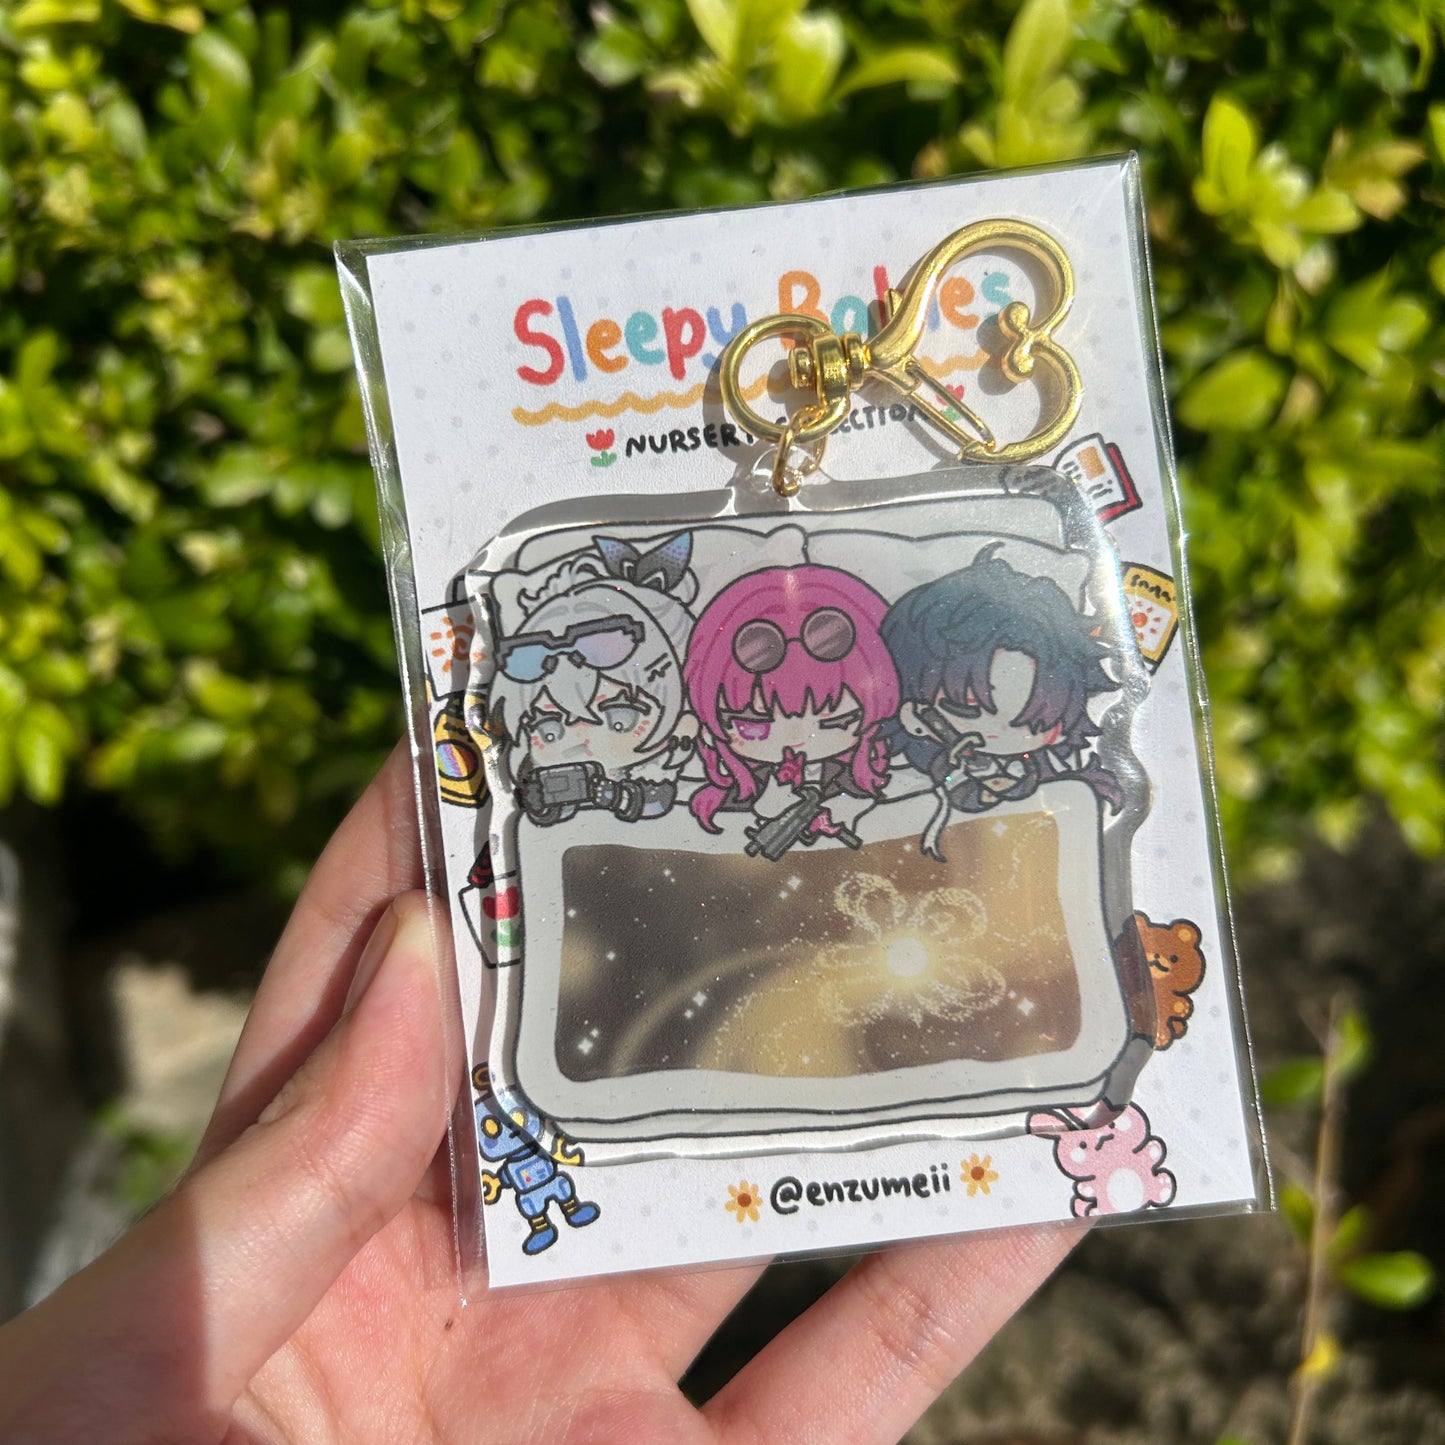 H:SR Sleepy Babies Glitter Epoxy Acrylic keychains